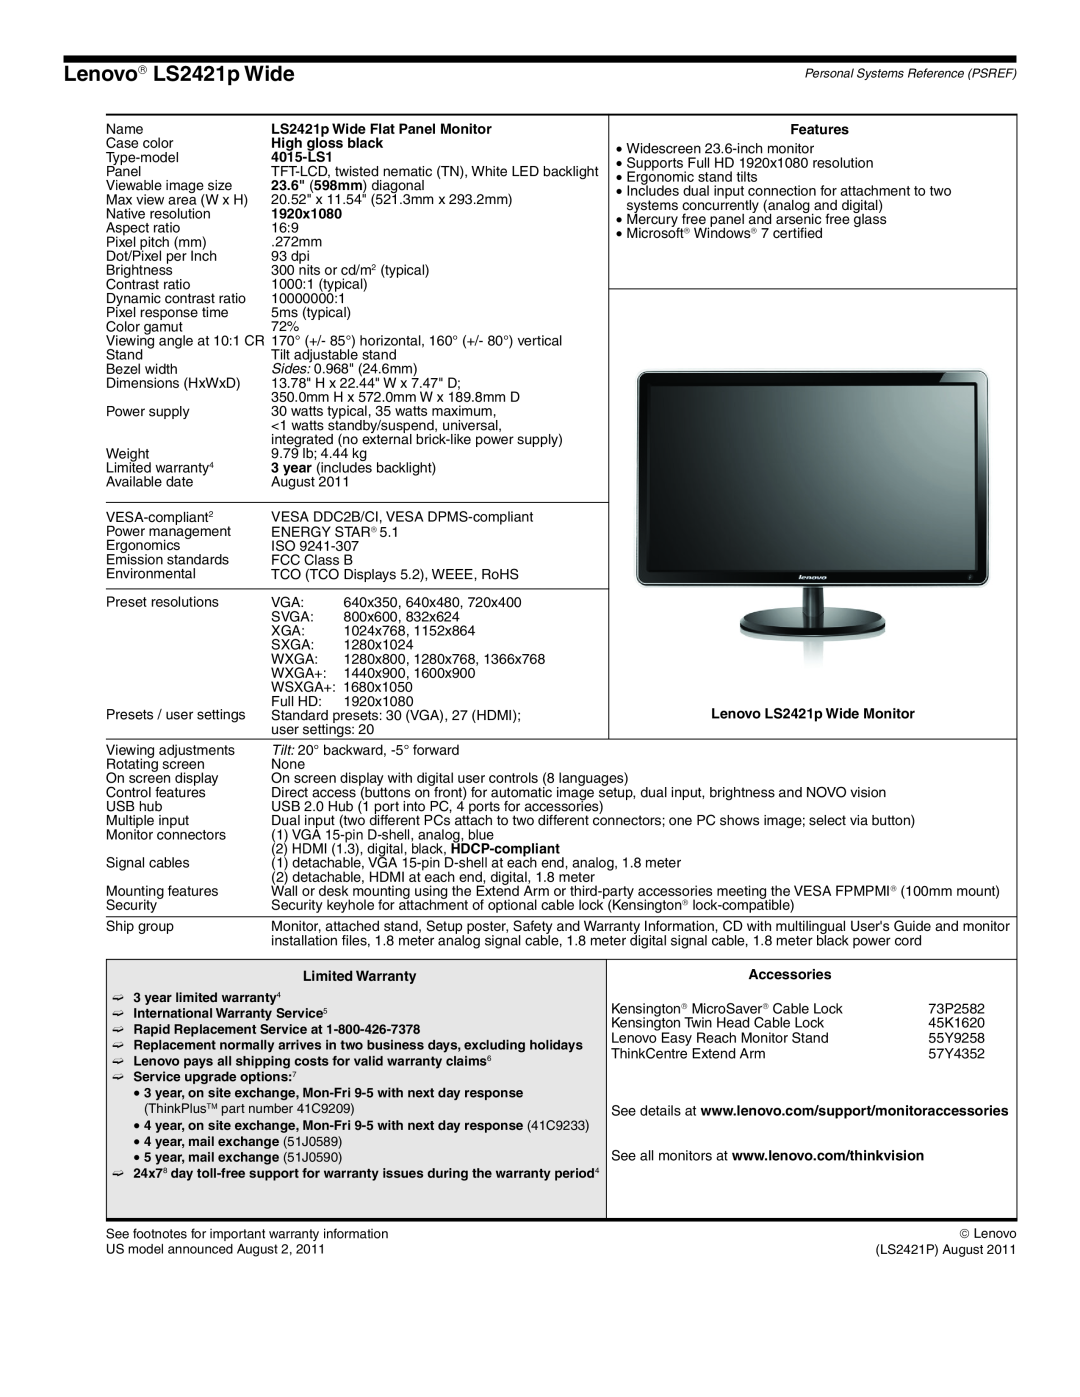 Lenovo L2321x manual Lenovo→ LS2421p Wide, LS2421p Wide Flat Panel Monitor, 4015-LS1, 23.6 598mm diagonal, High gloss black 